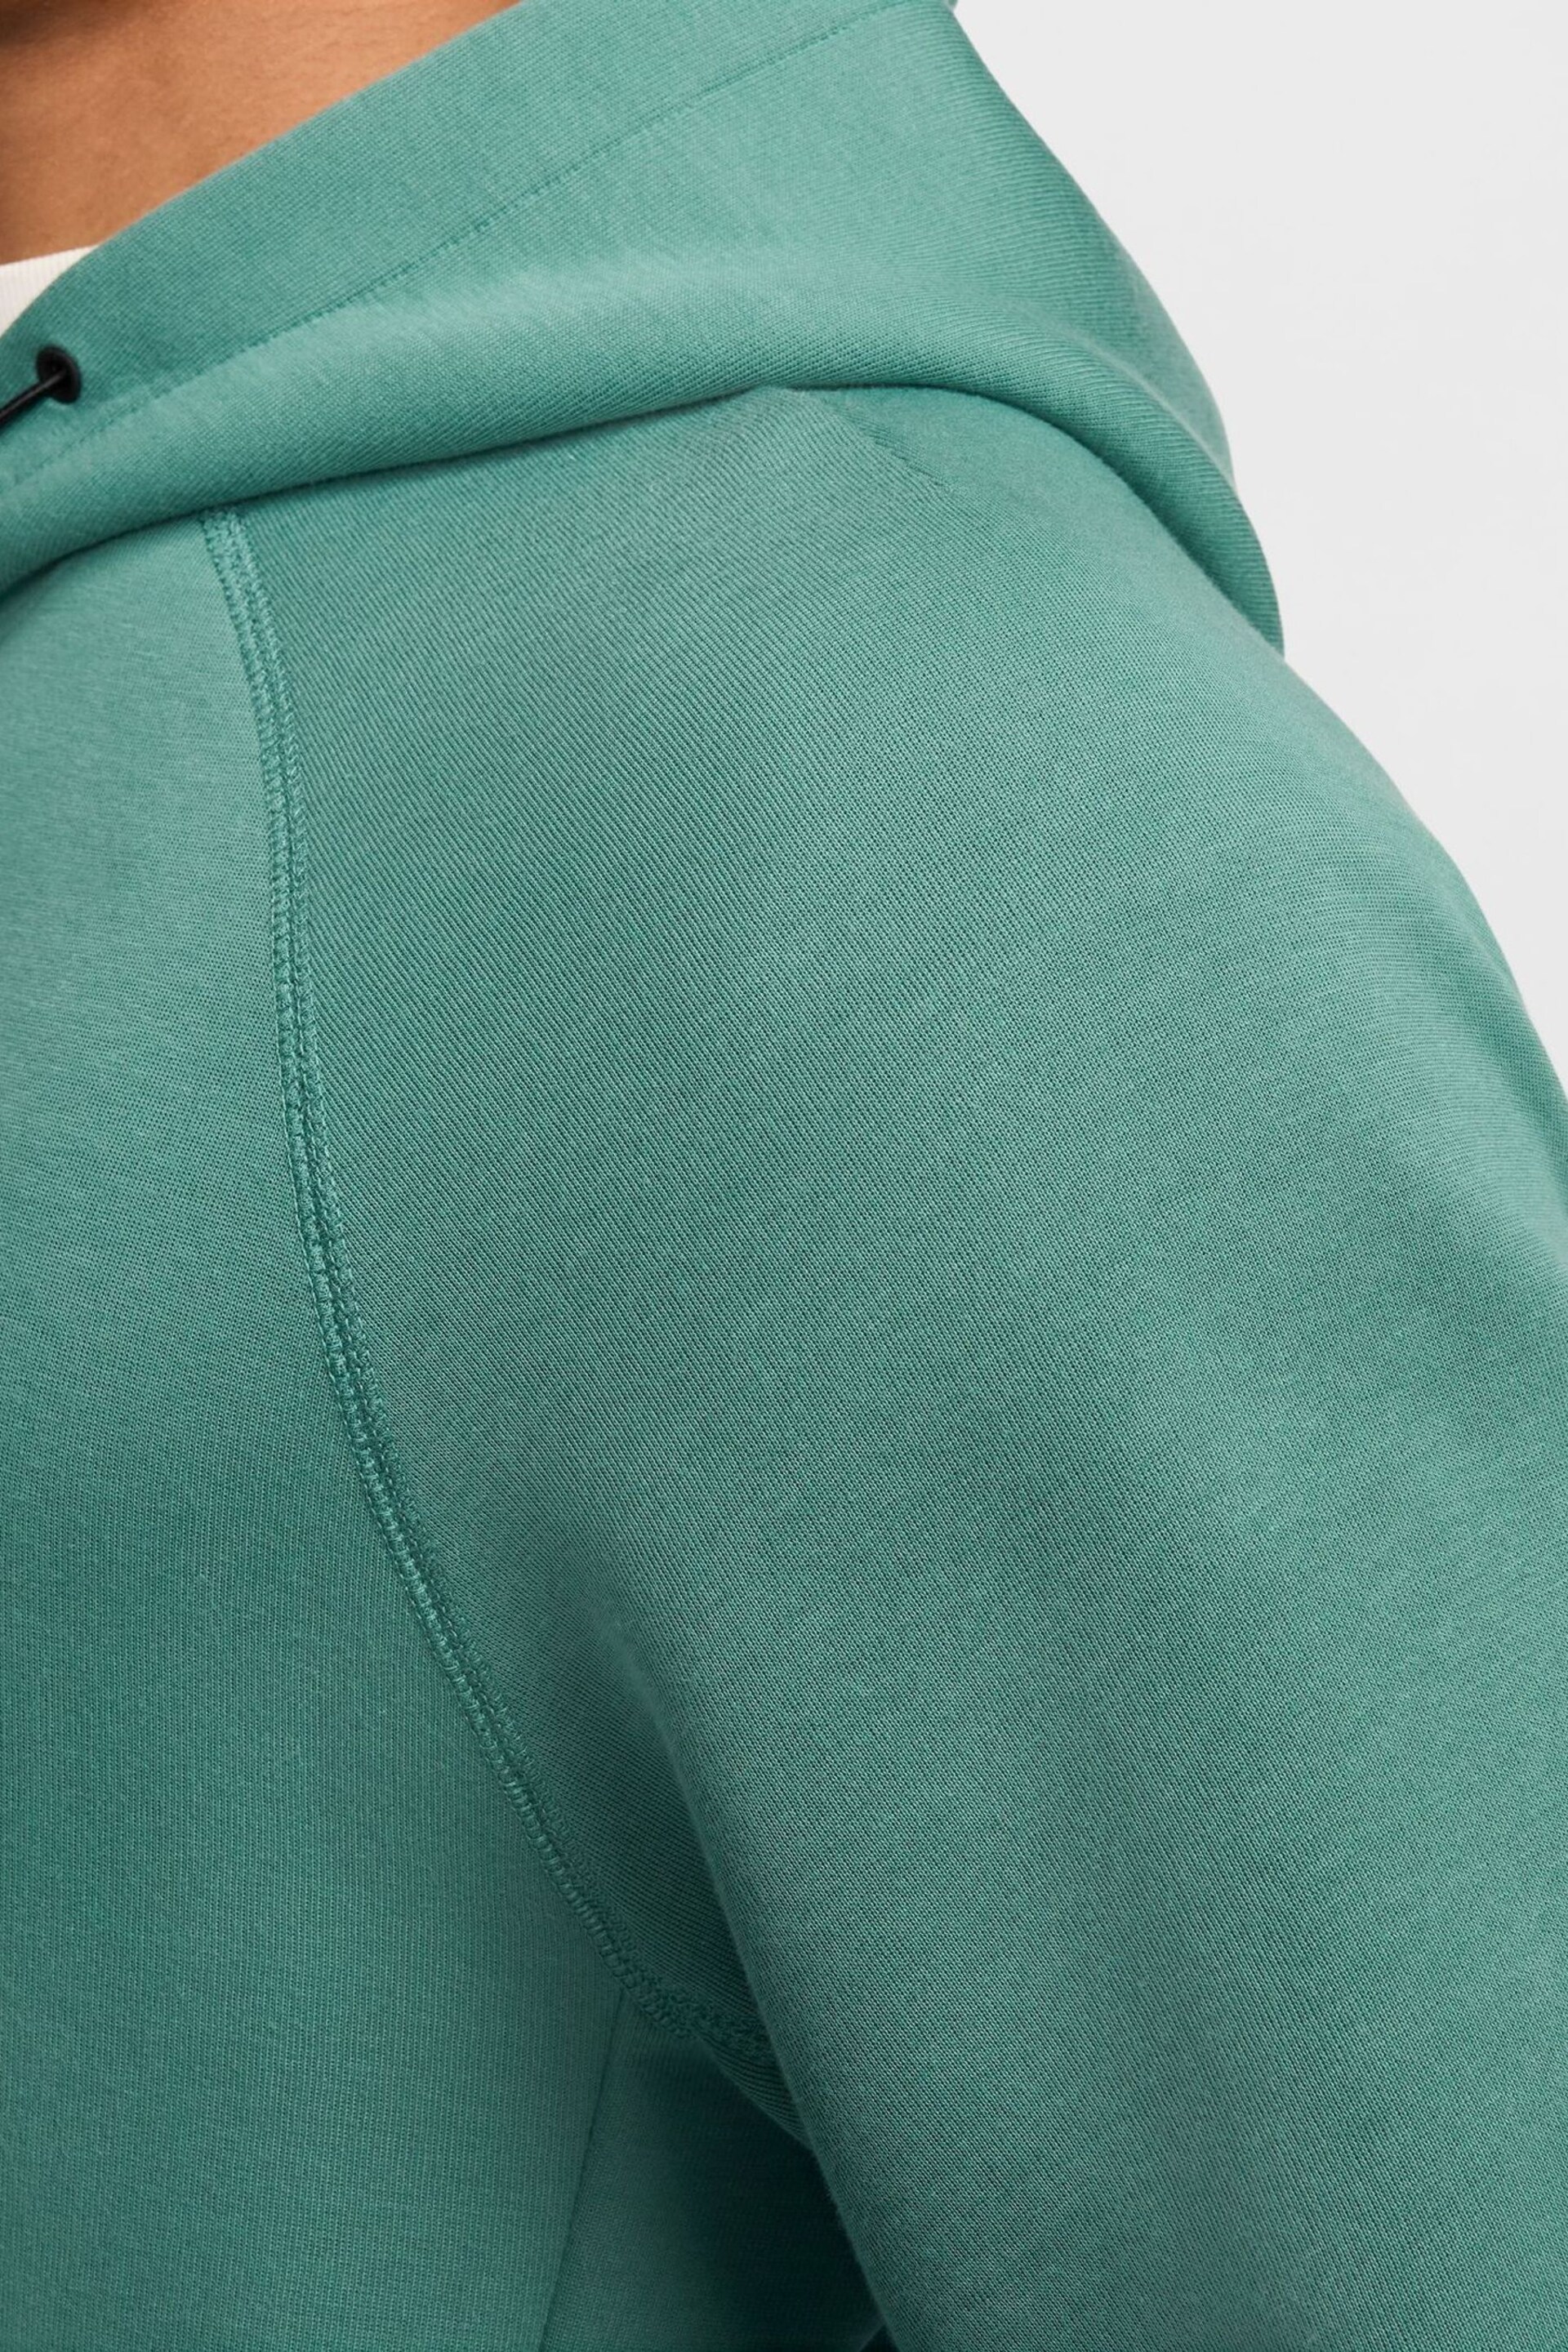 Nike Green/Black Tech Fleece Pullover Hoodie - Image 5 of 11